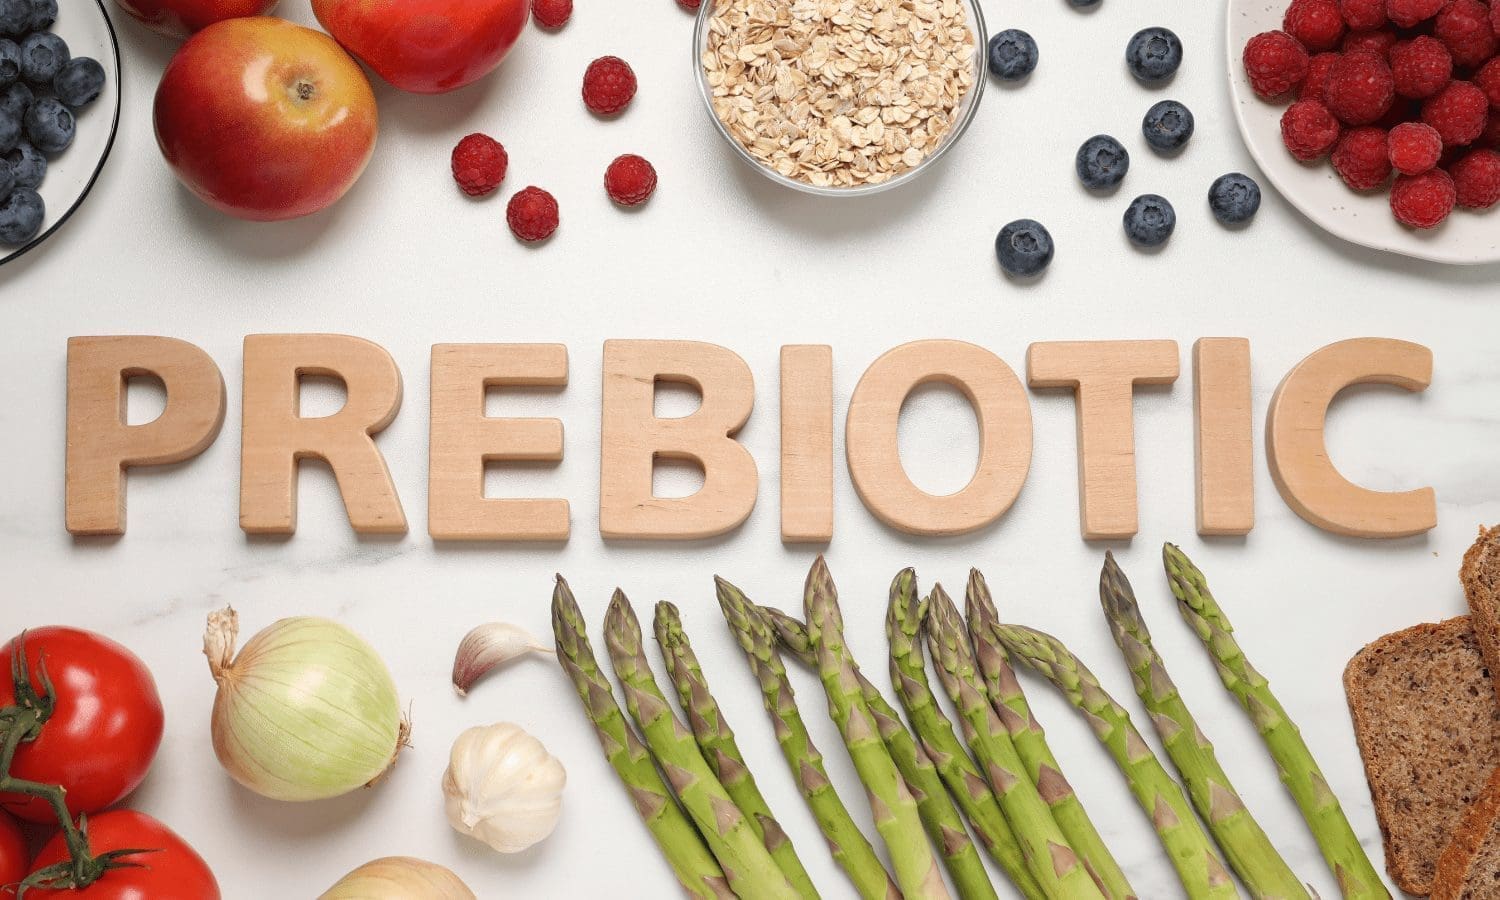 Prebiotic Foods for Gut Health